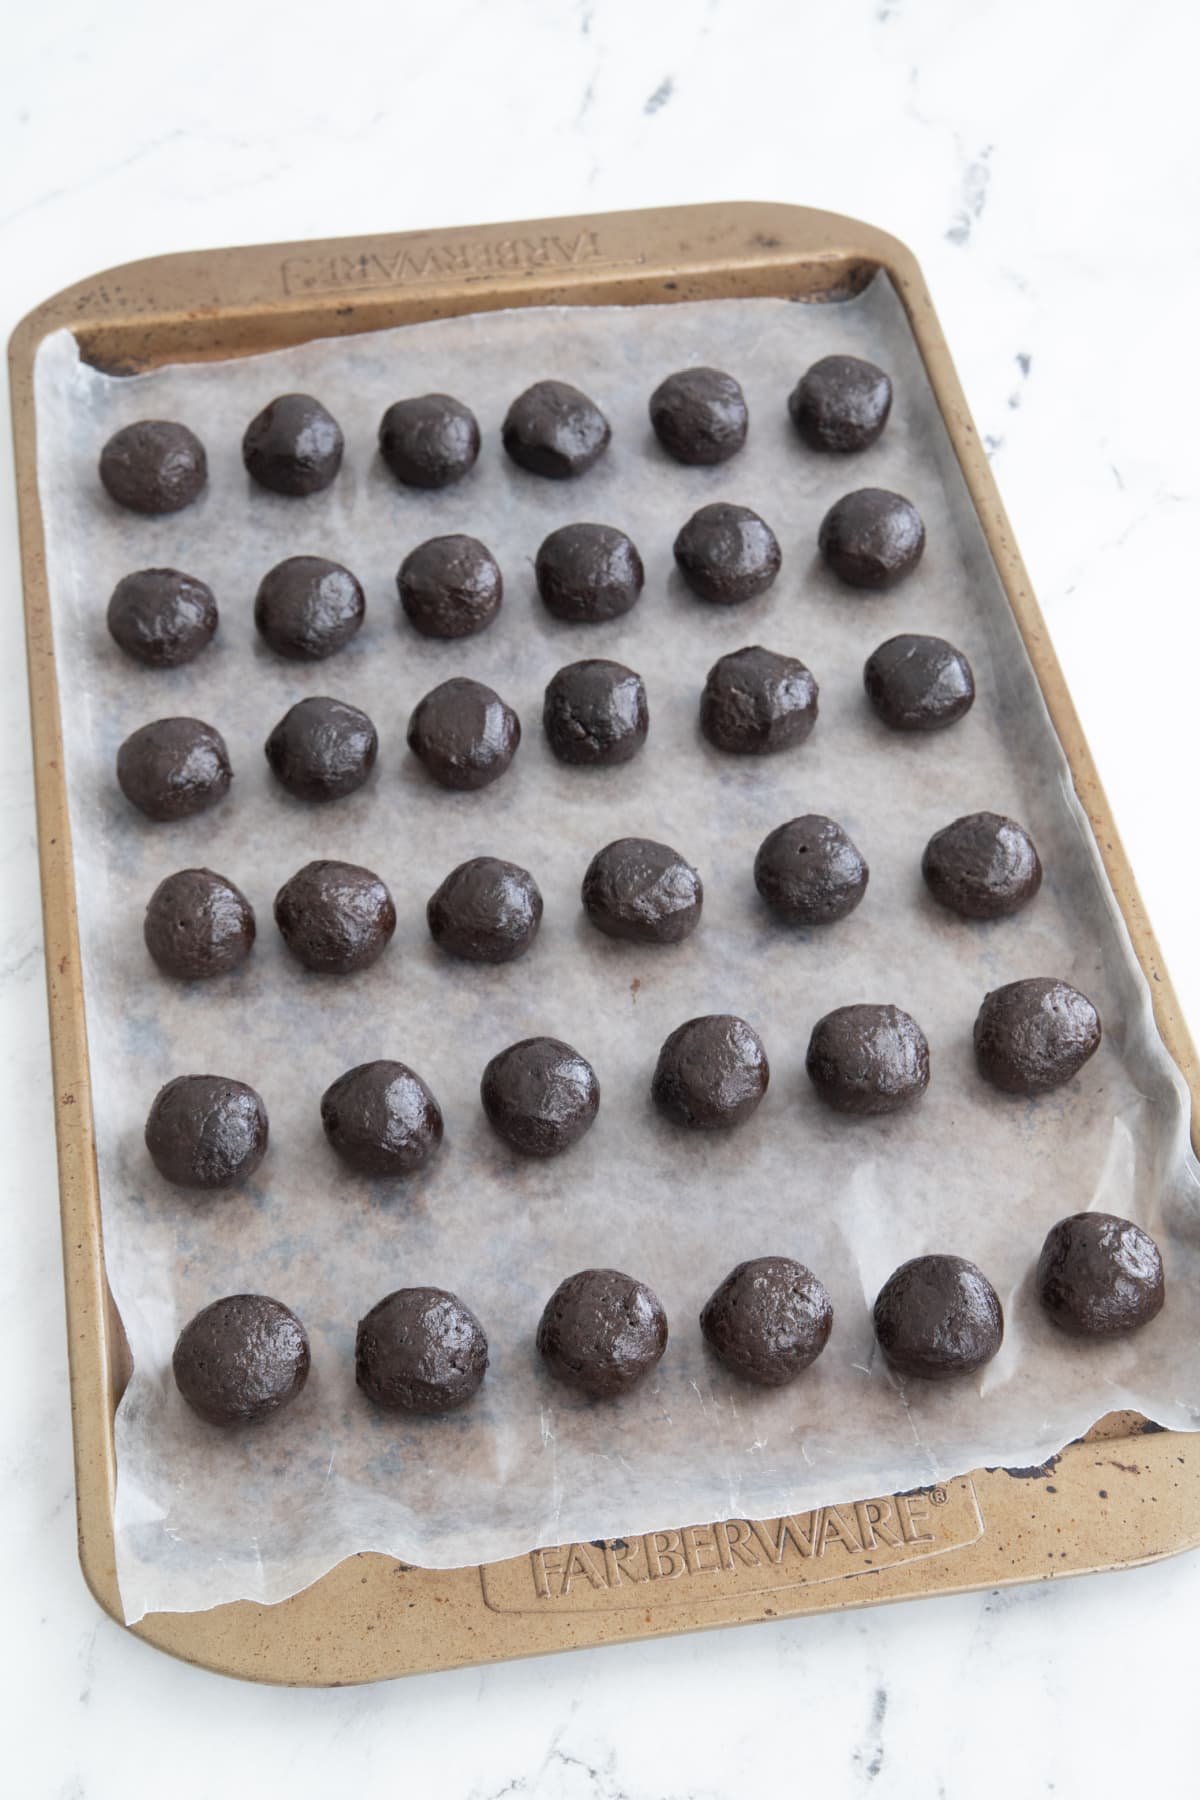 Oreo cookie balls on cookie sheet